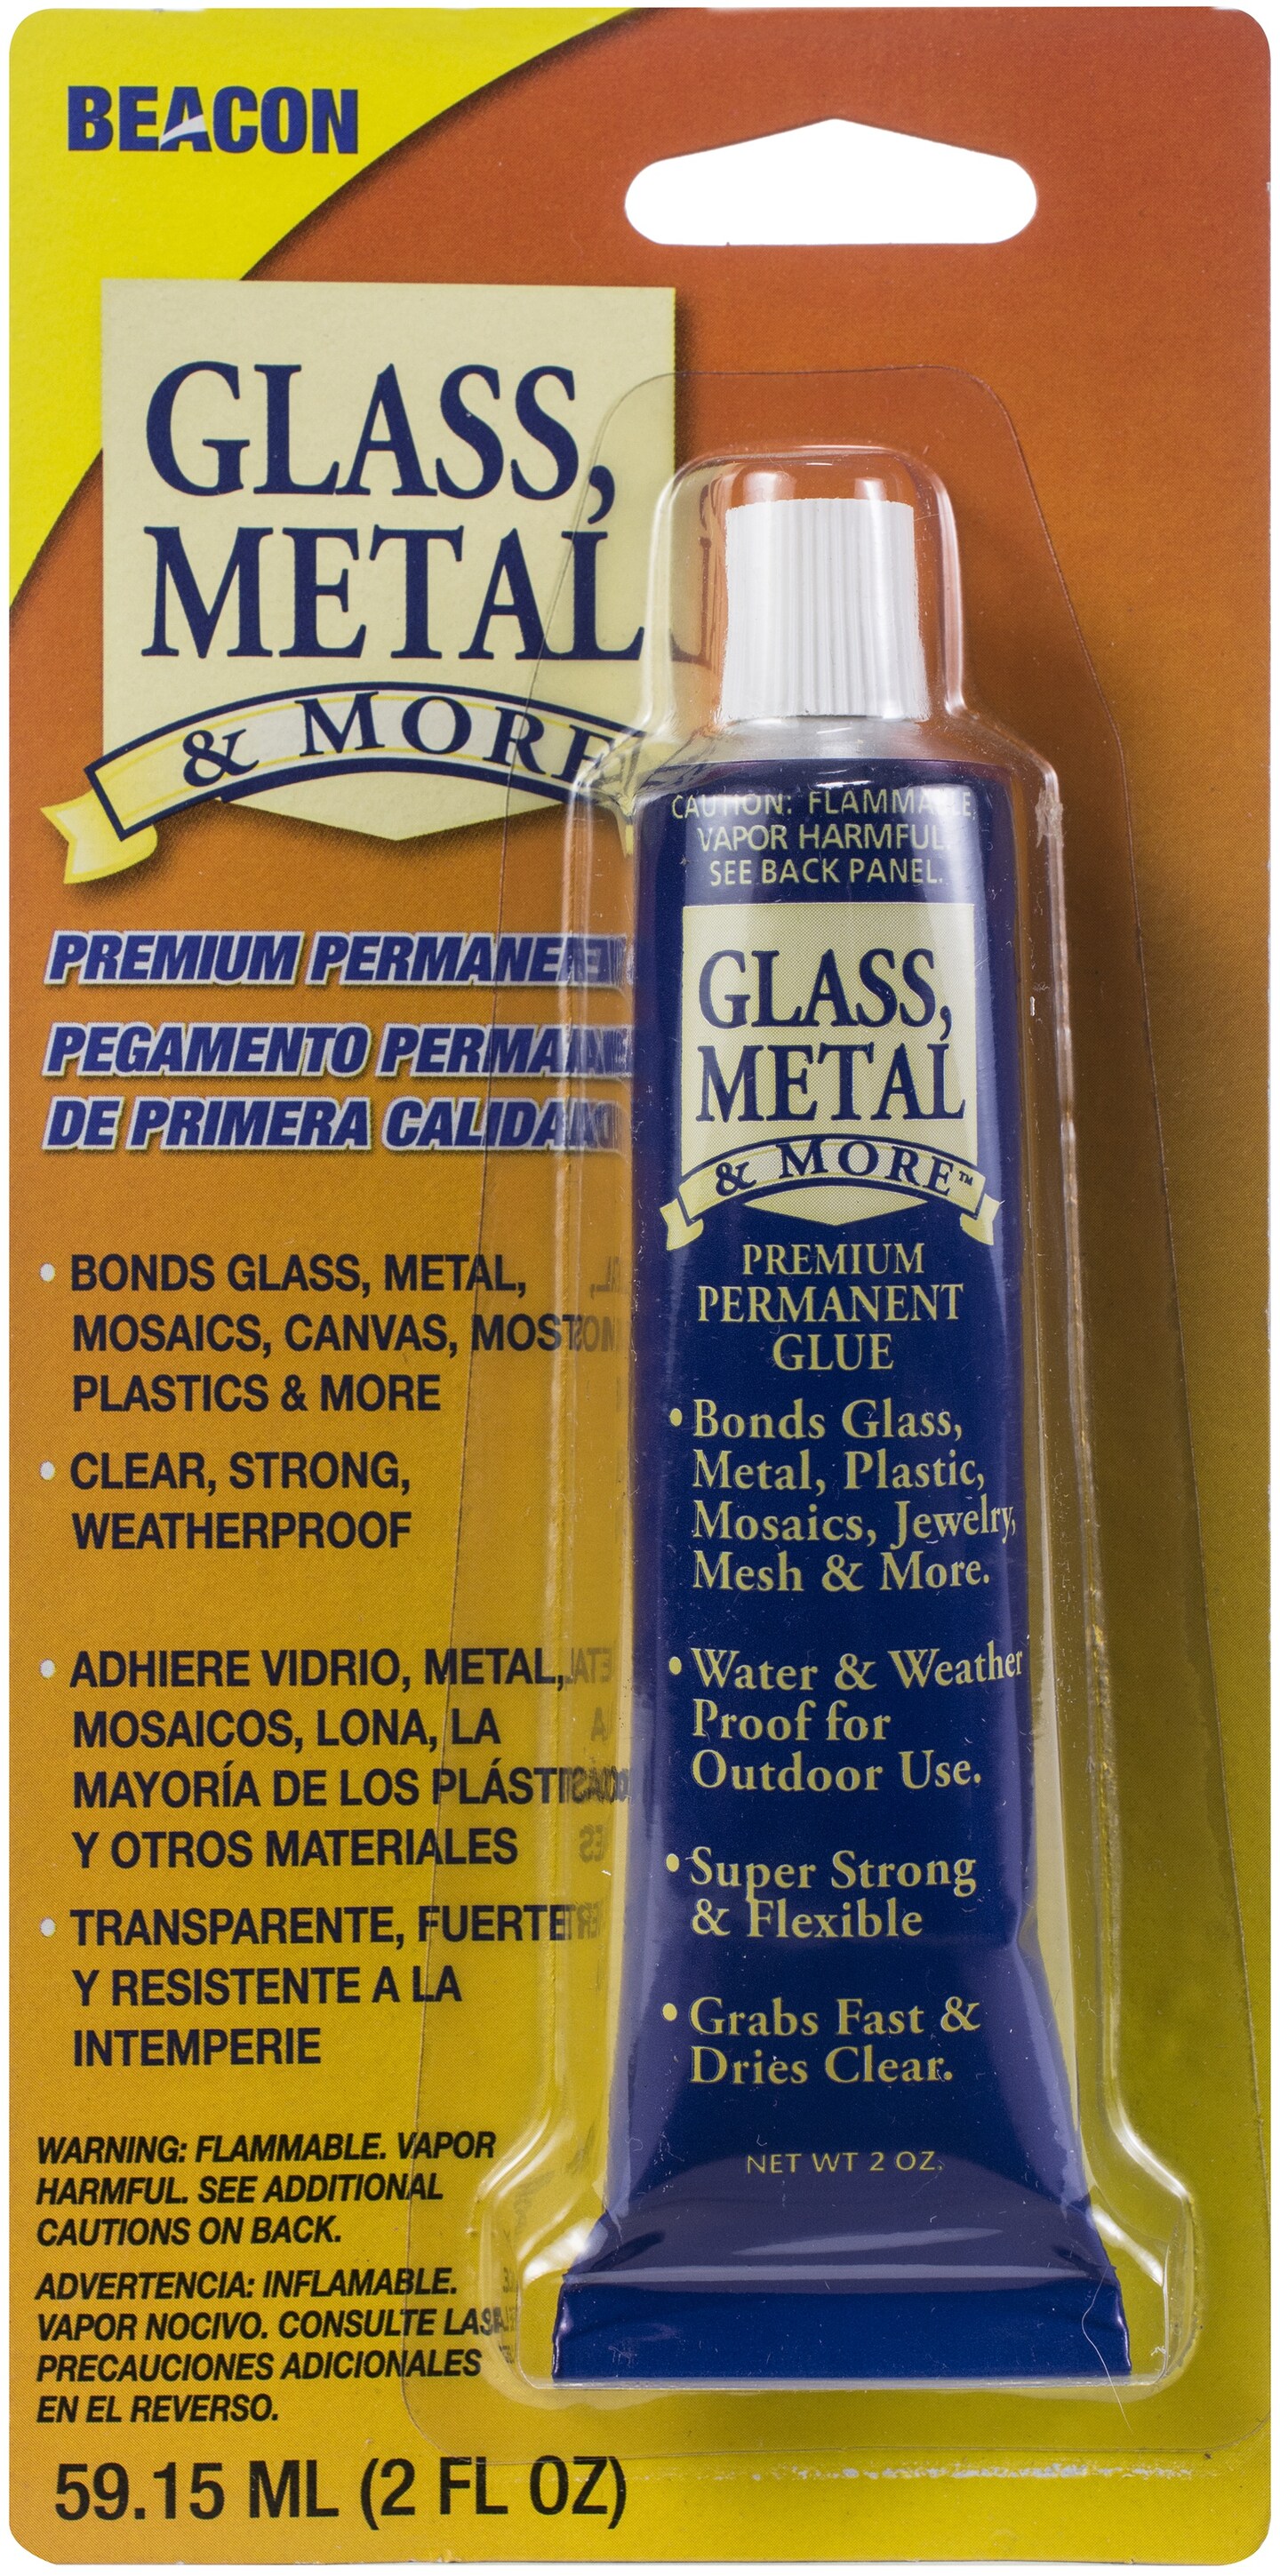 Glass, Metal & More Premium Permanent Glue-2oz